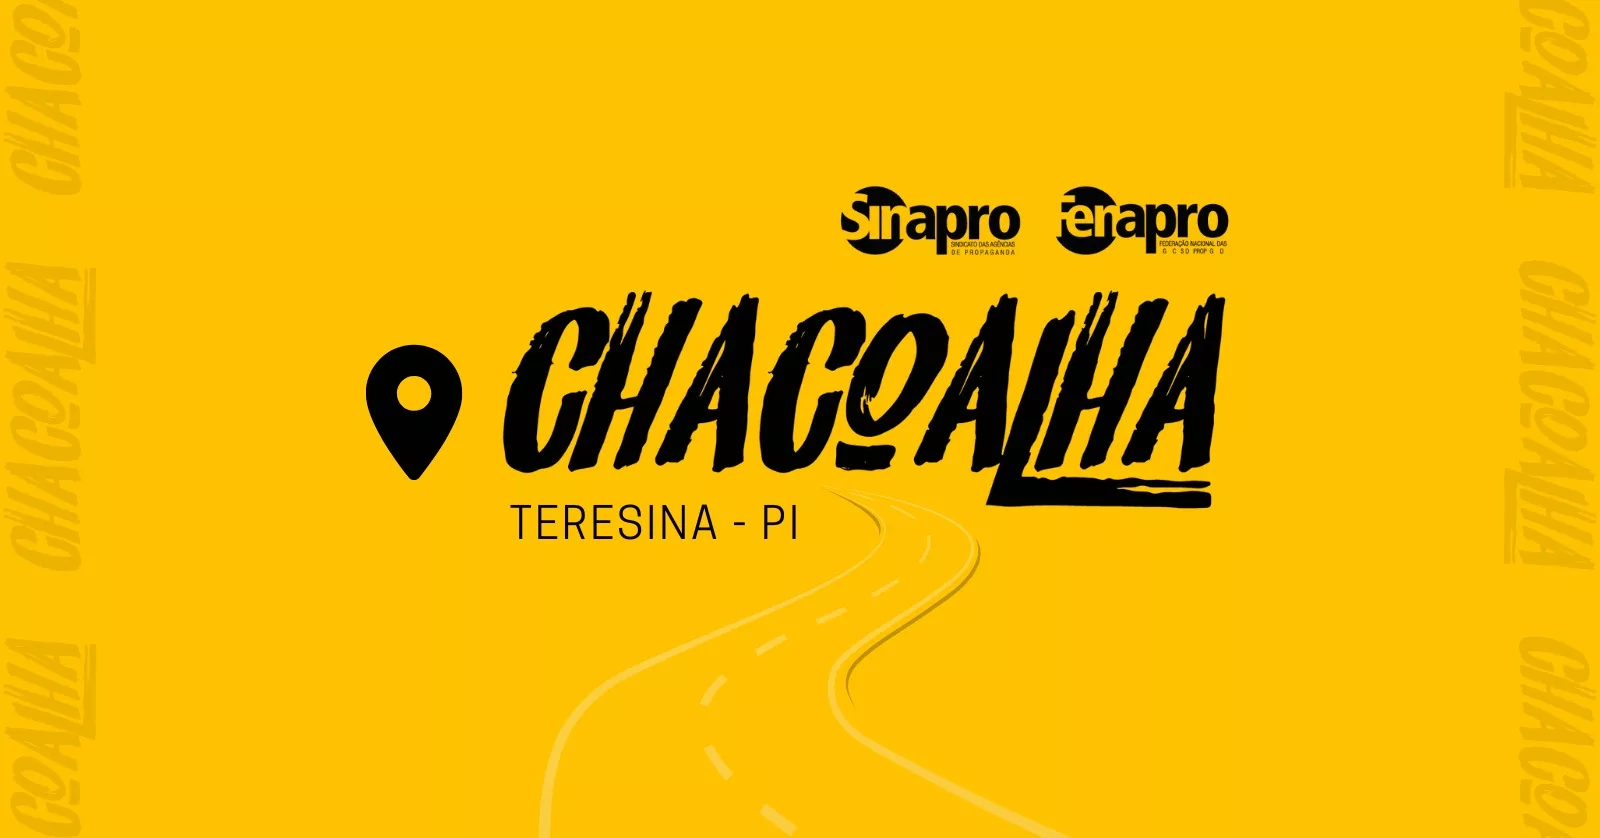 Ecossistema Sinapro/Fenapro realiza o “Chacoalha” em Teresina